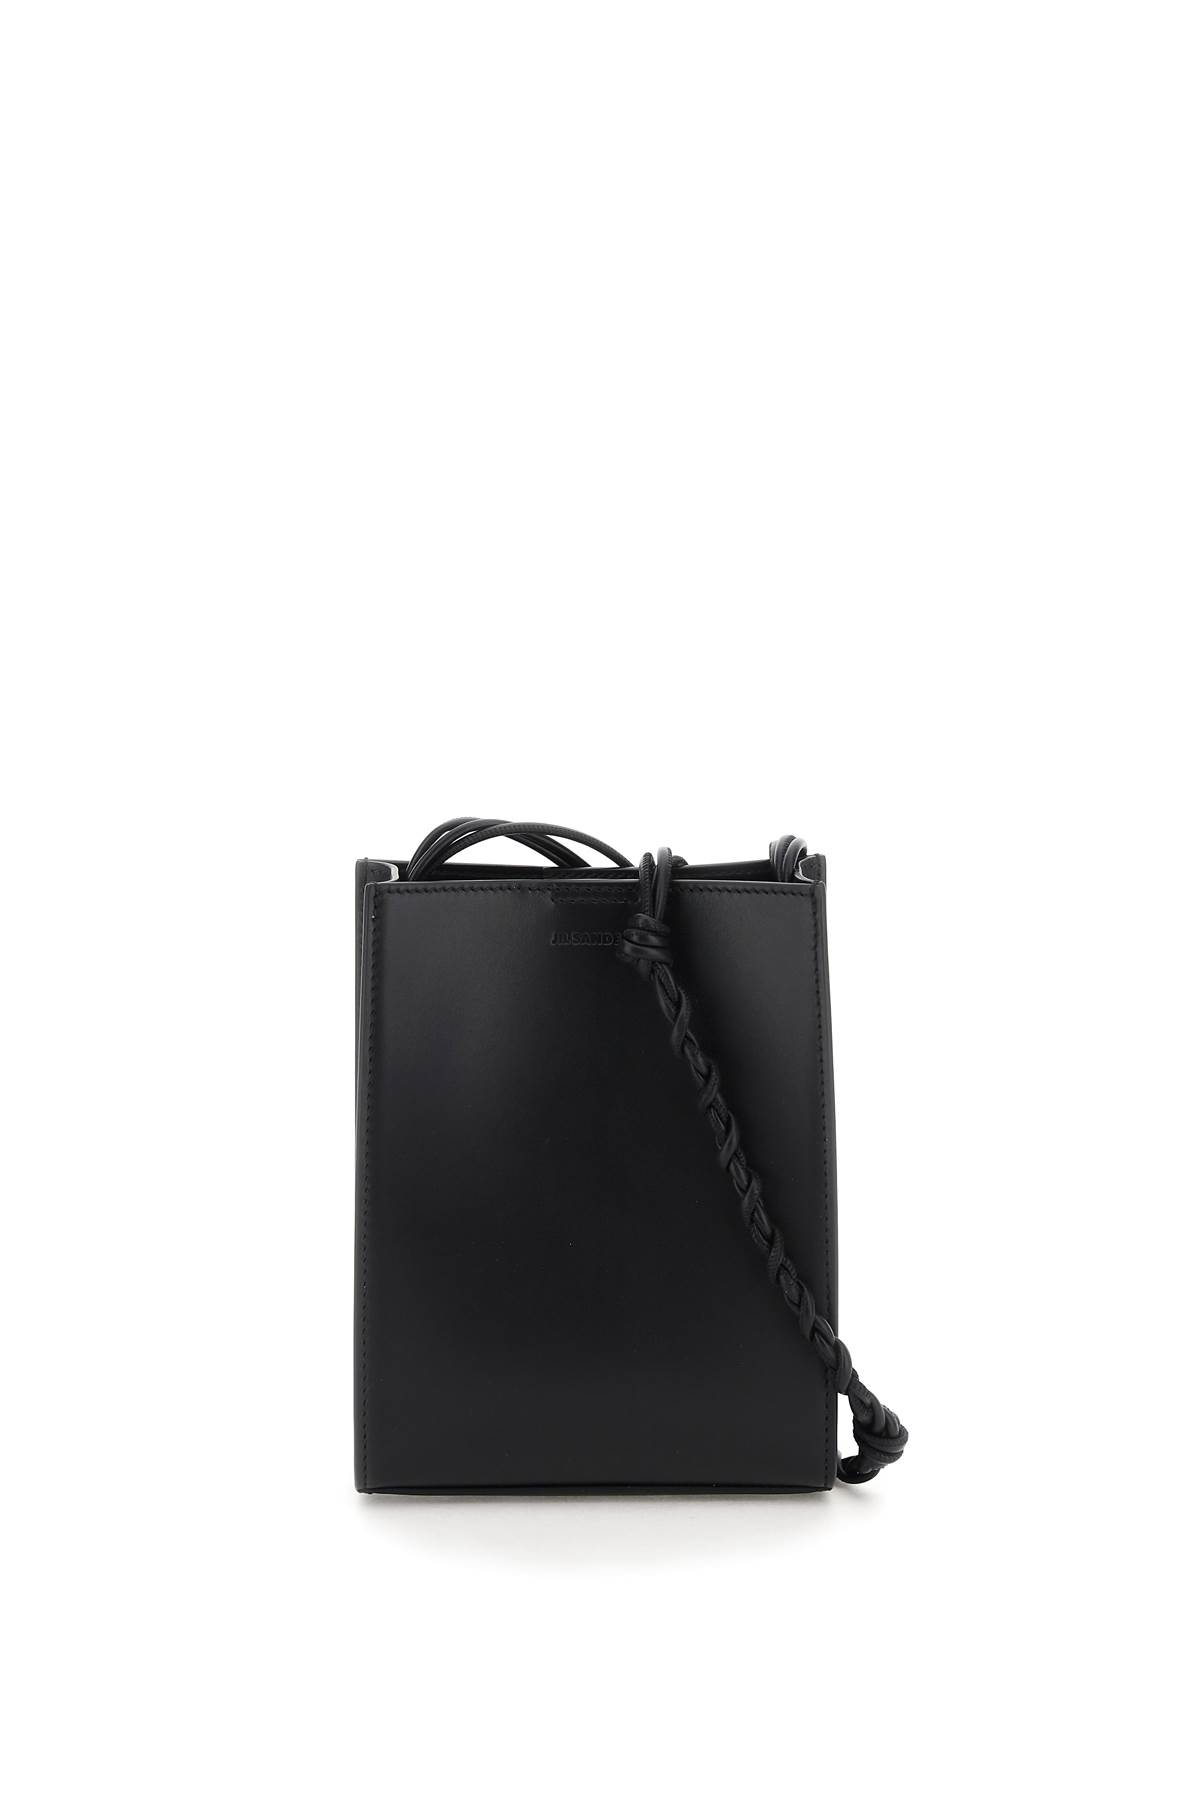 Jil Sander Tangle Small Bag In Black | ModeSens